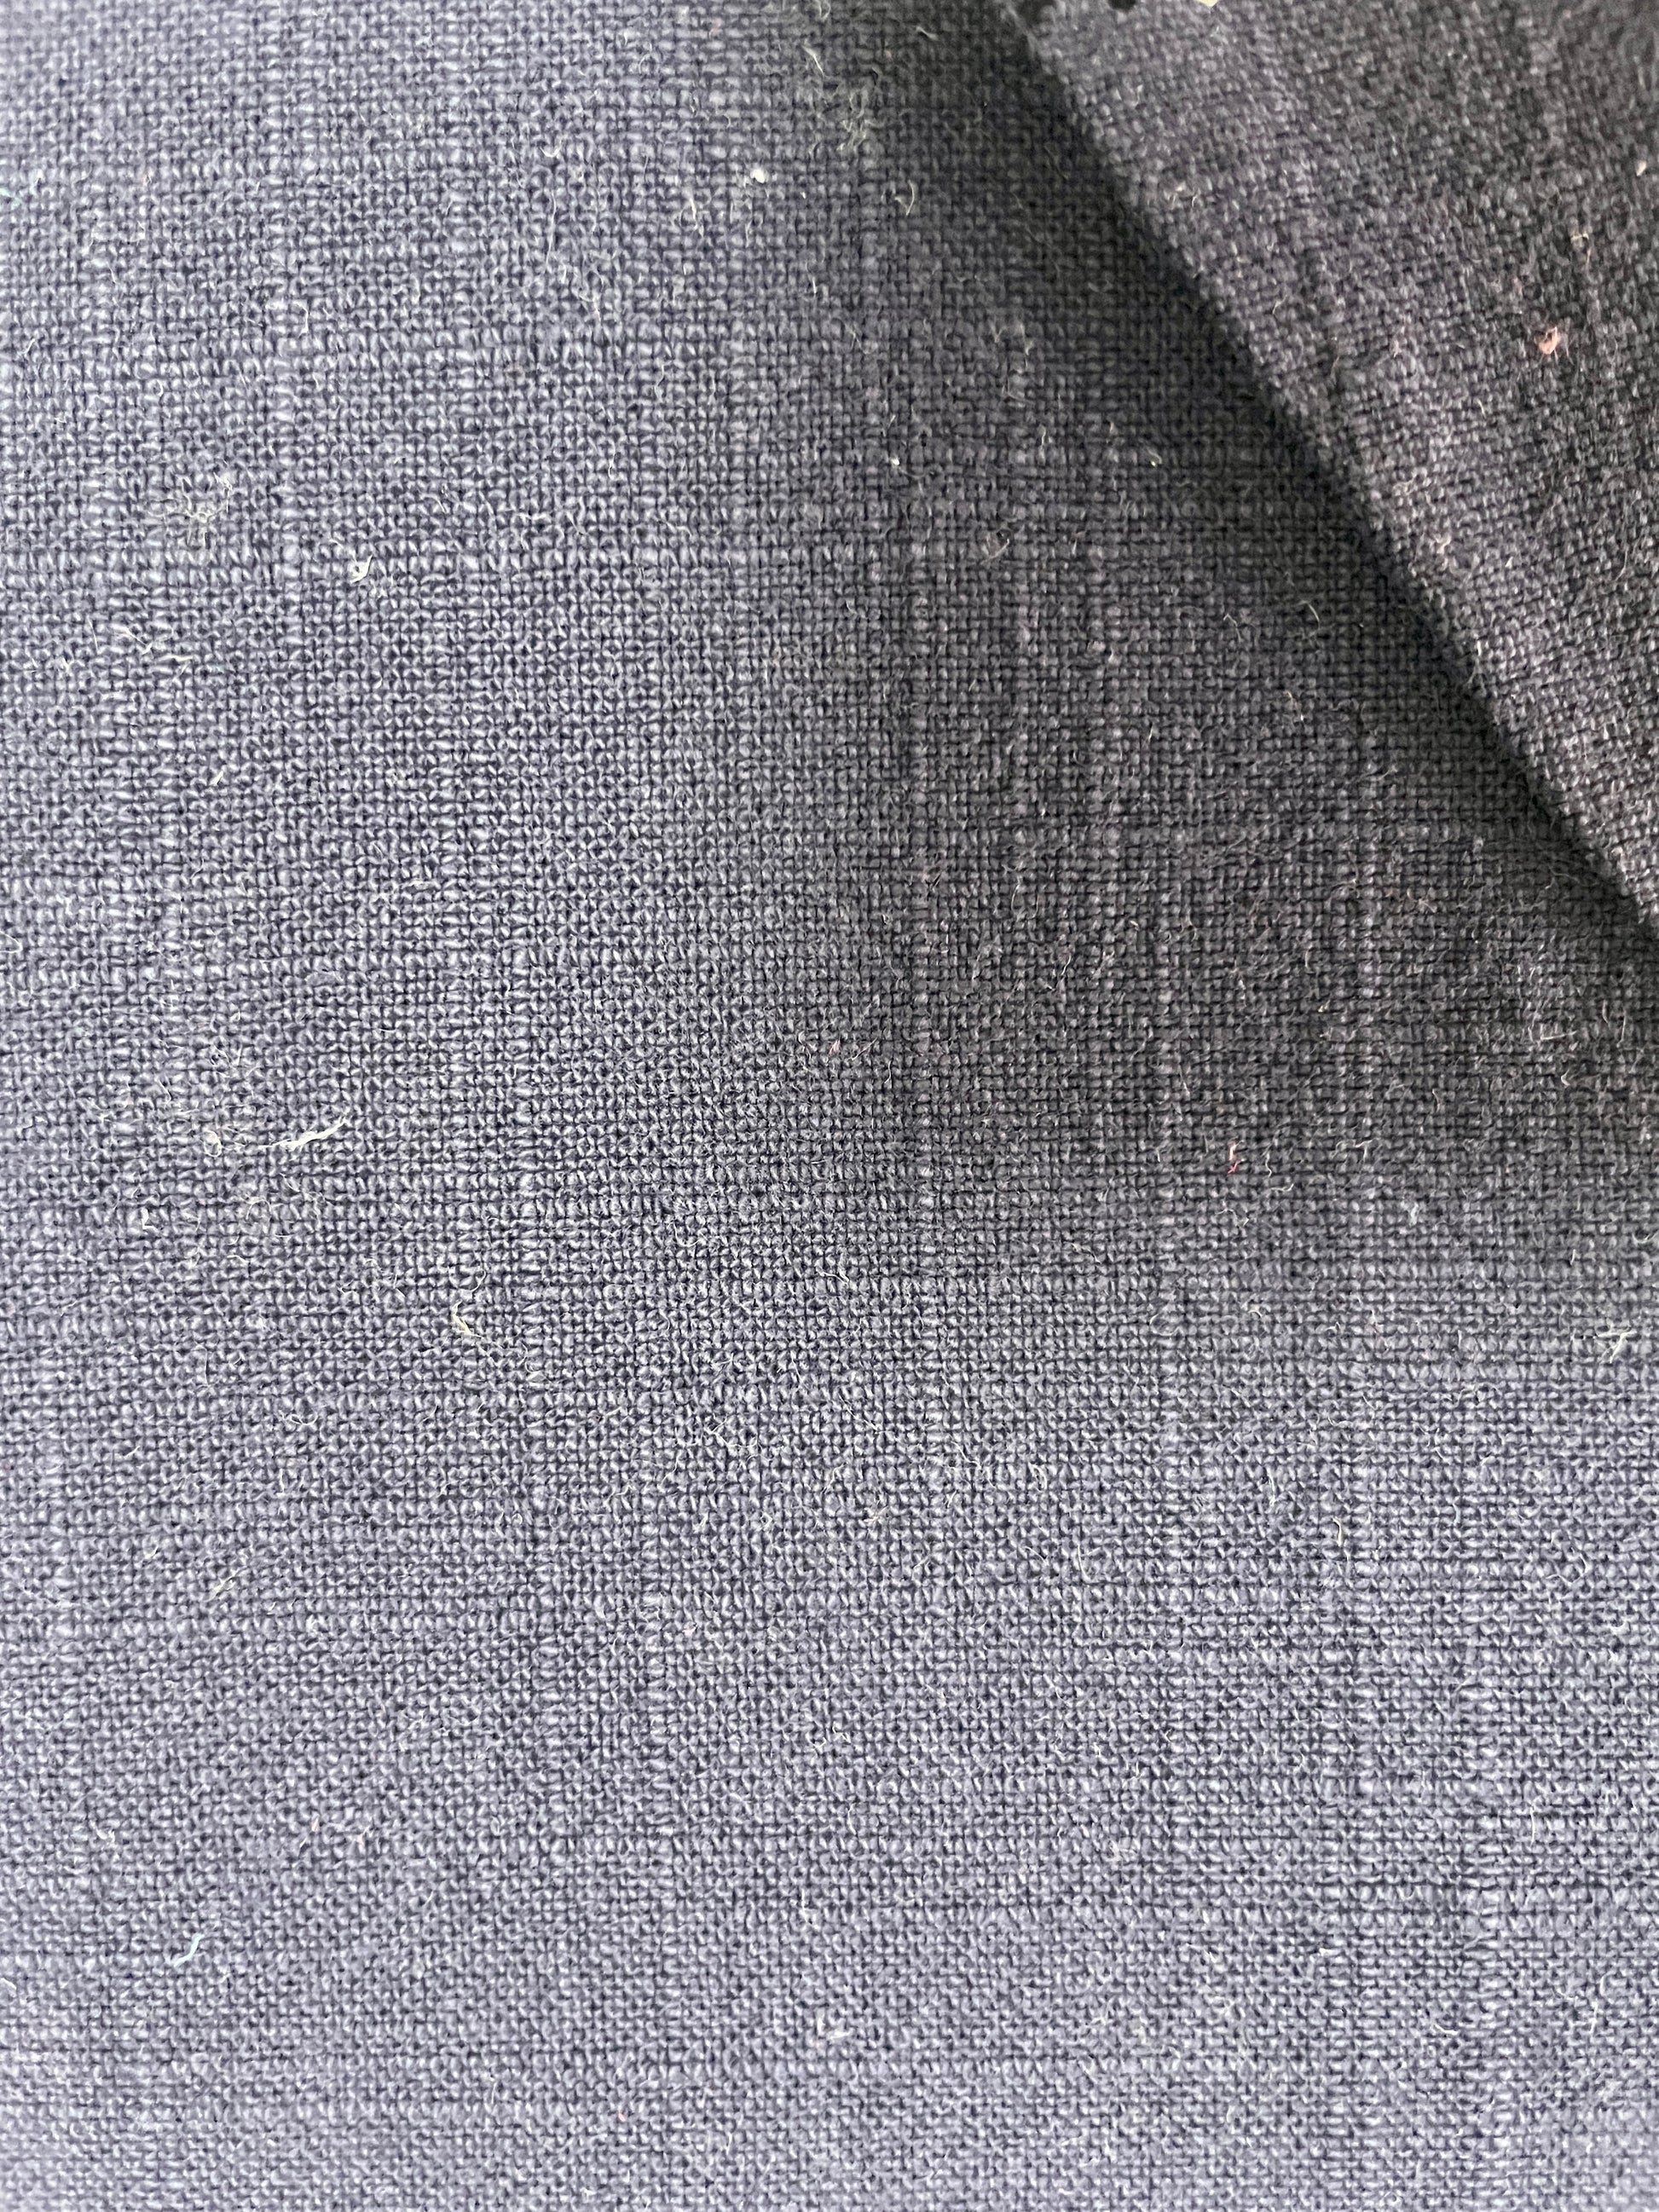 Thick Linen Cotton Blended Fabric - Natasha Fabric